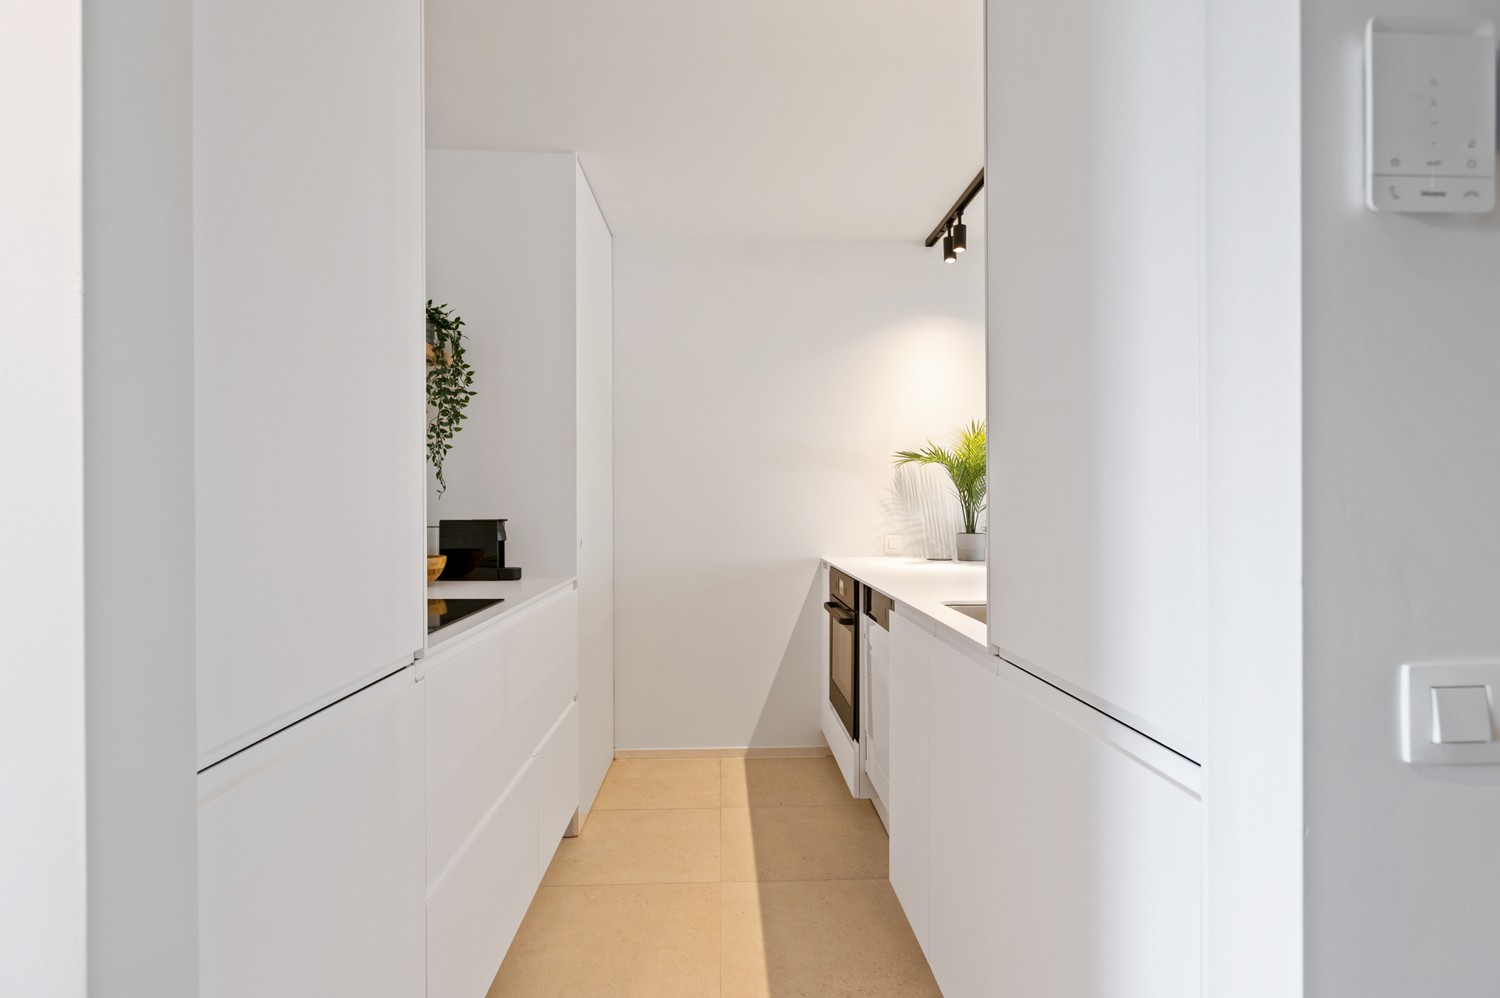 Hoogwaardig vernieuwd appartement met twee slaapkamers en tuin in Deurne! afbeelding 10